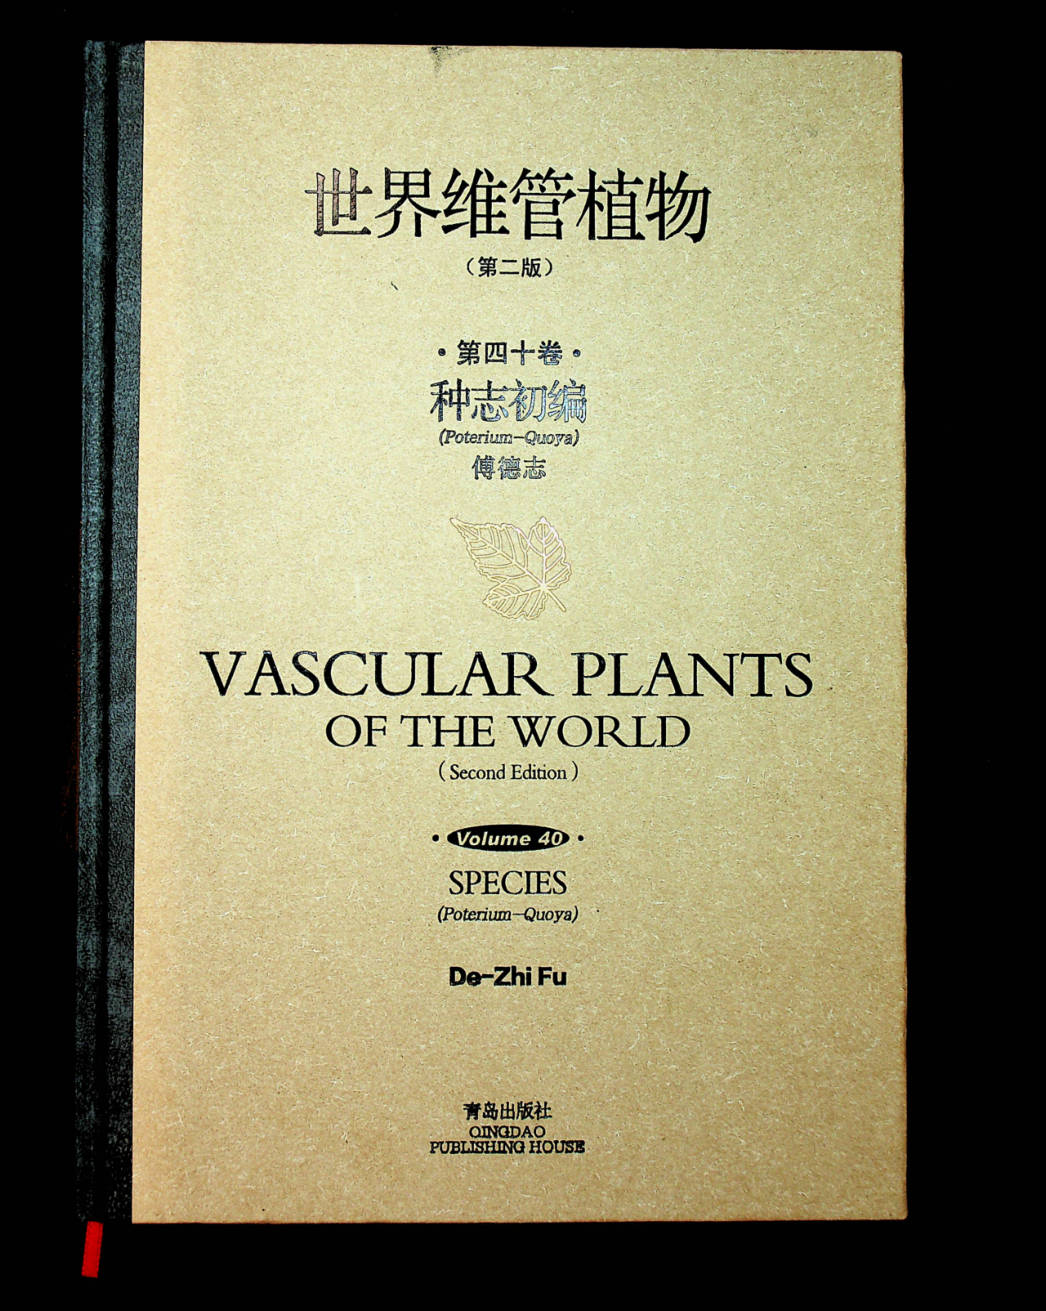 世界维管植物 第二版 第四十卷 种志初编 (Poterium-Qmya)  VASCULAR PLANTS OF THE WORLD (Second Edition) Volume 40 SPECIES (Potexium-Quoya)